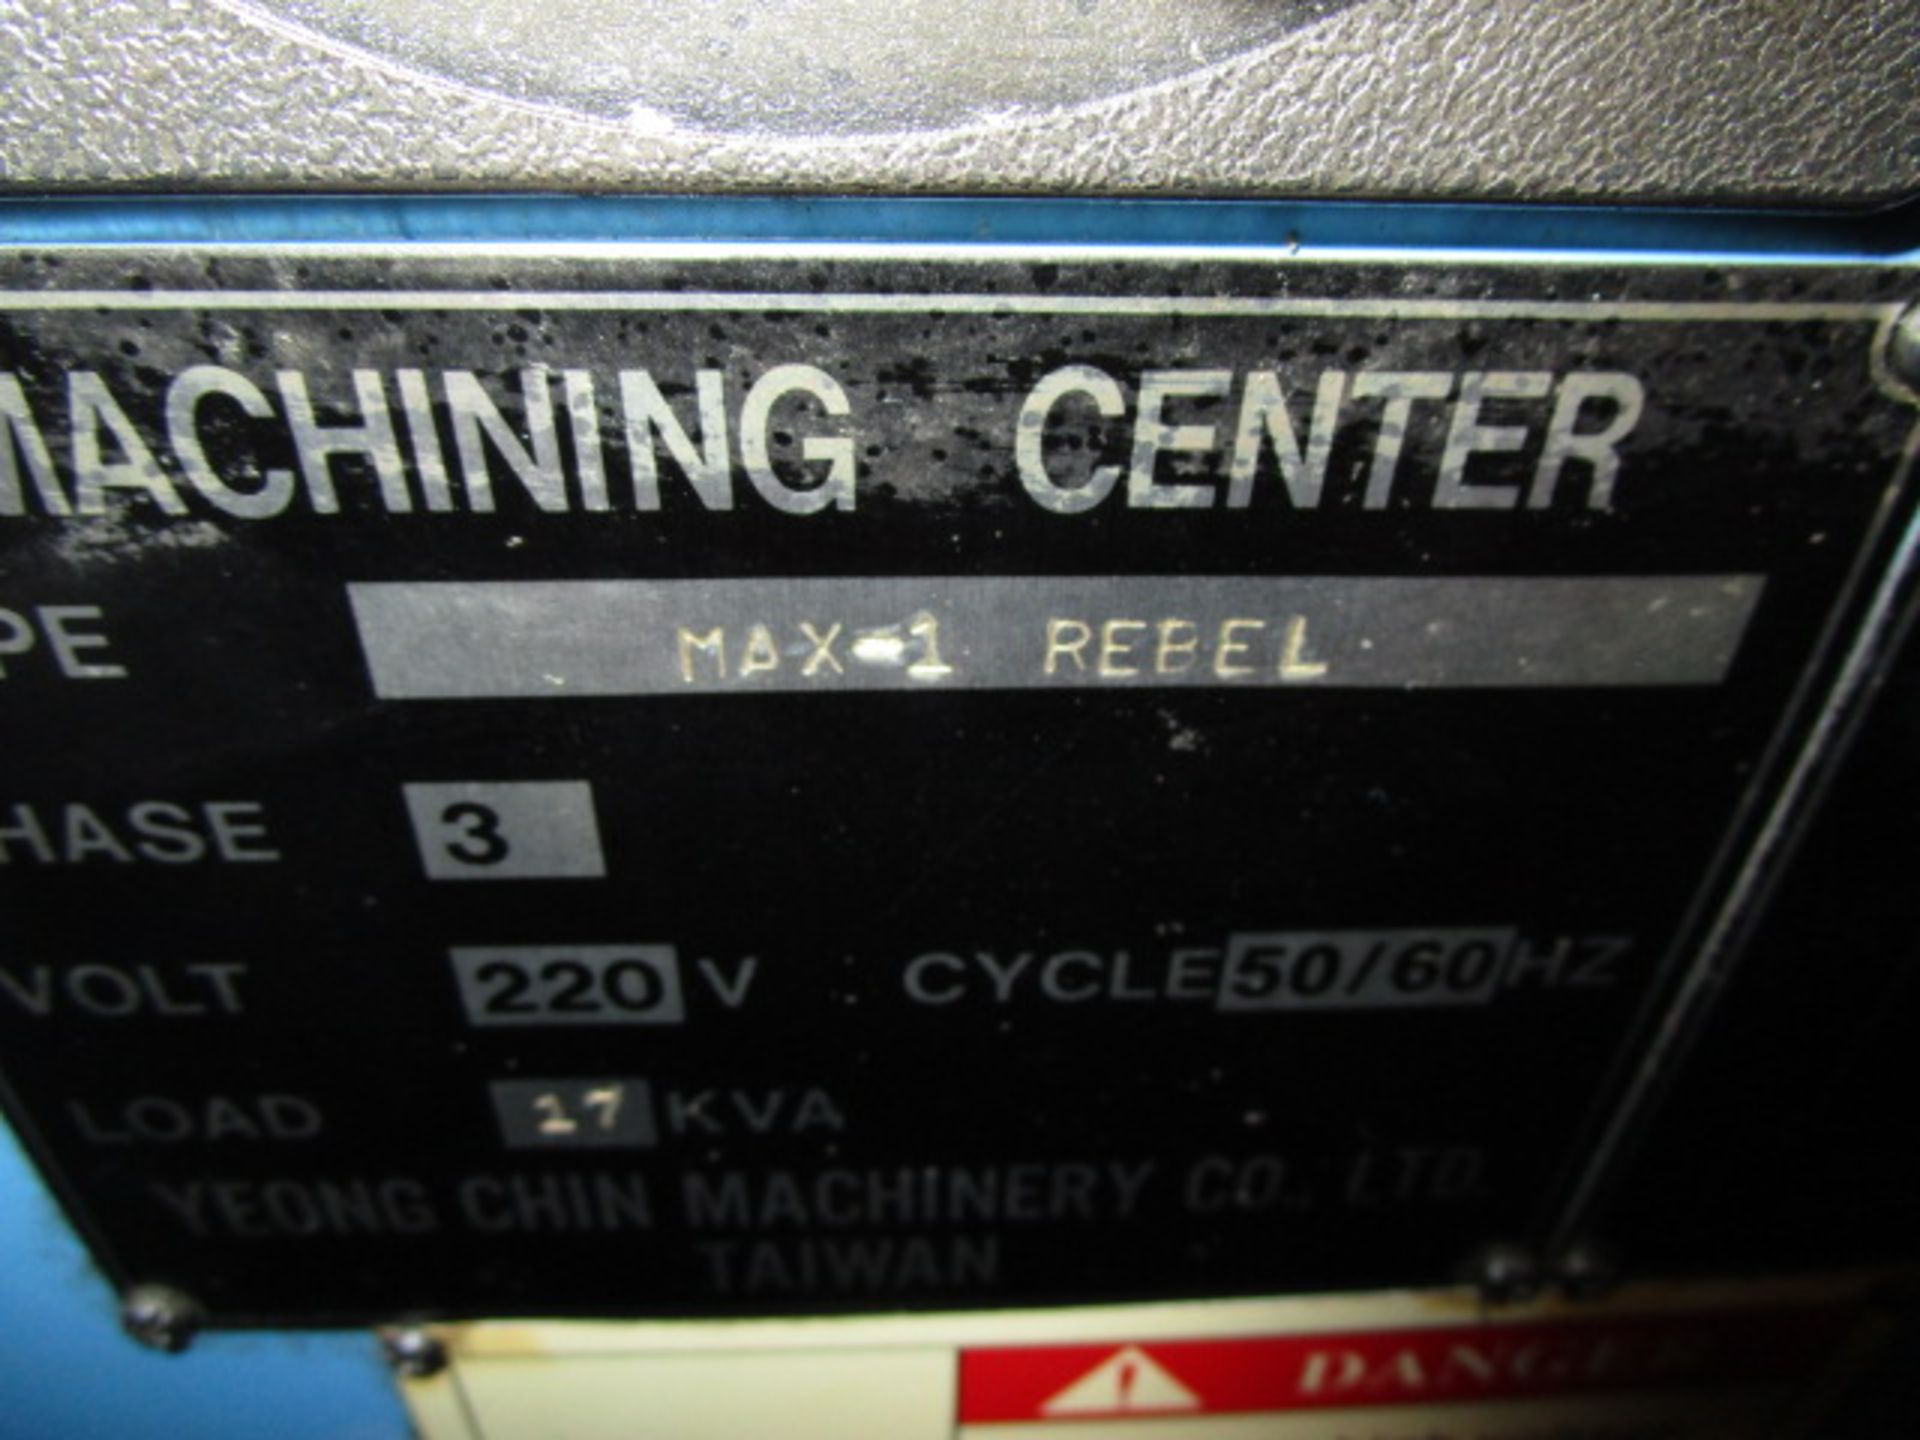 SuperMax Max-1 Rebel CNC Vertical Machining Center, Model MAX-1 REBEL, Serial Number 9111082 - Image 16 of 20